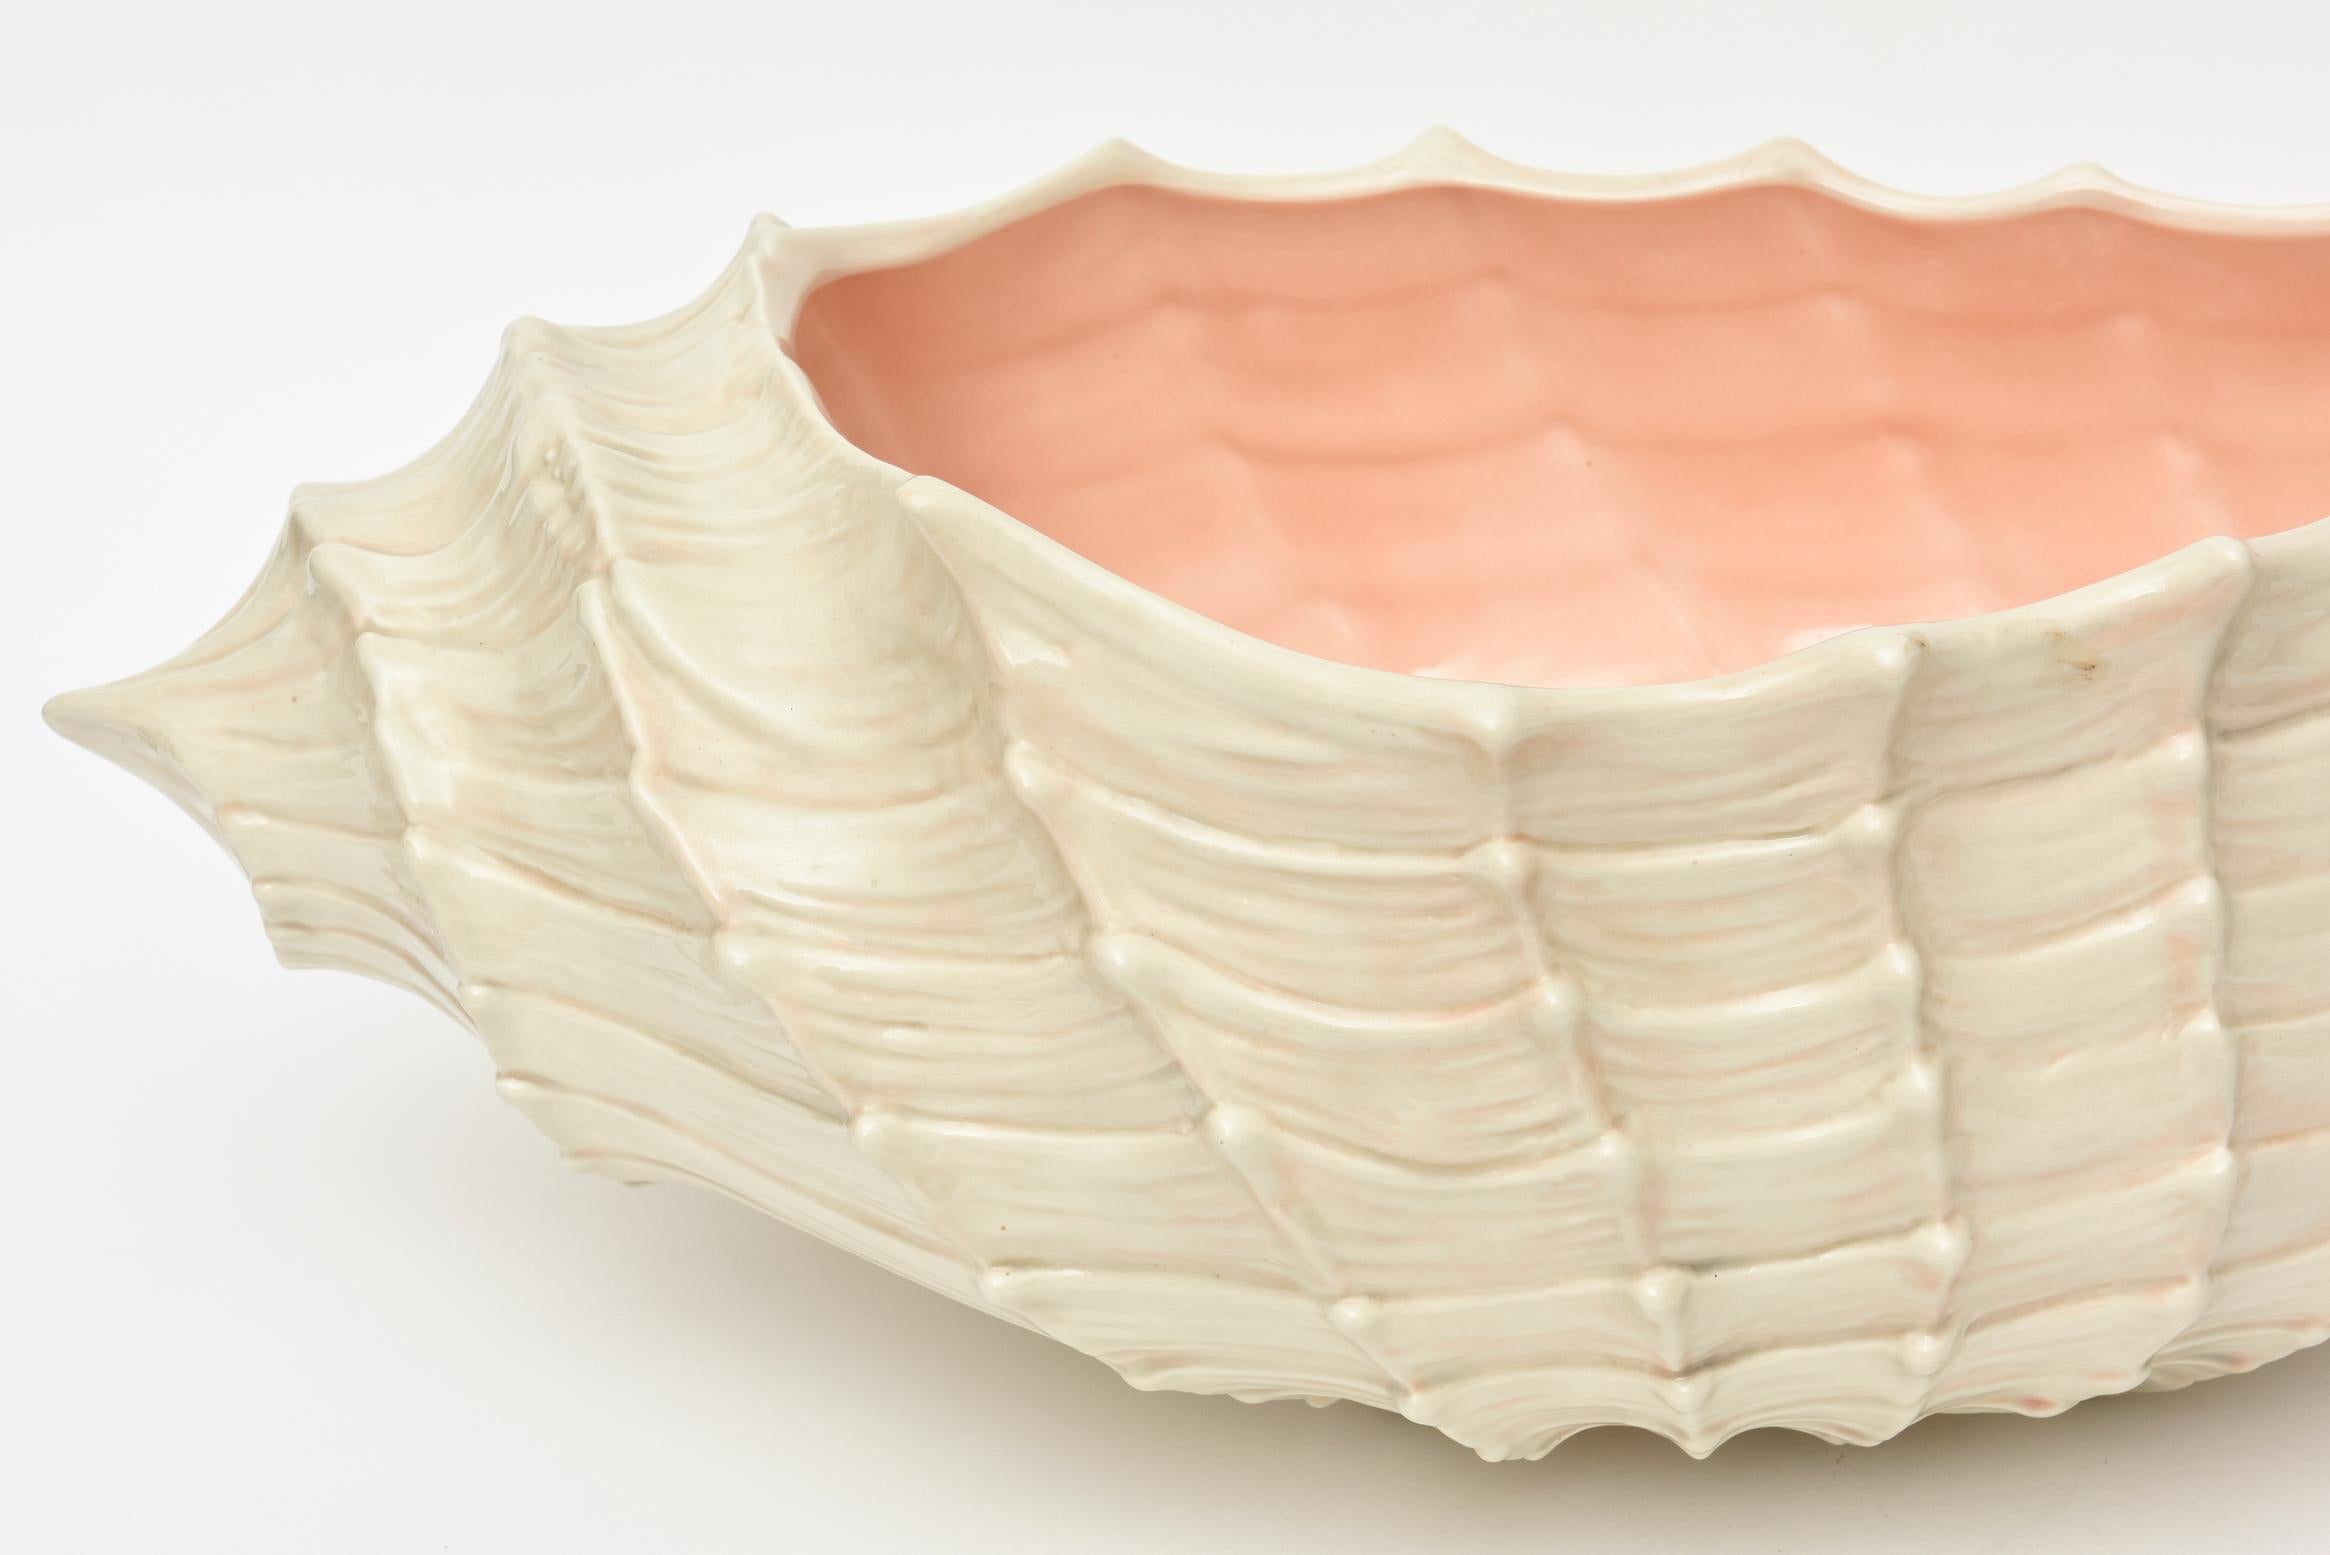 Organic Modern Ceramic Glazed Shell Bowl Centerpiece Vintage